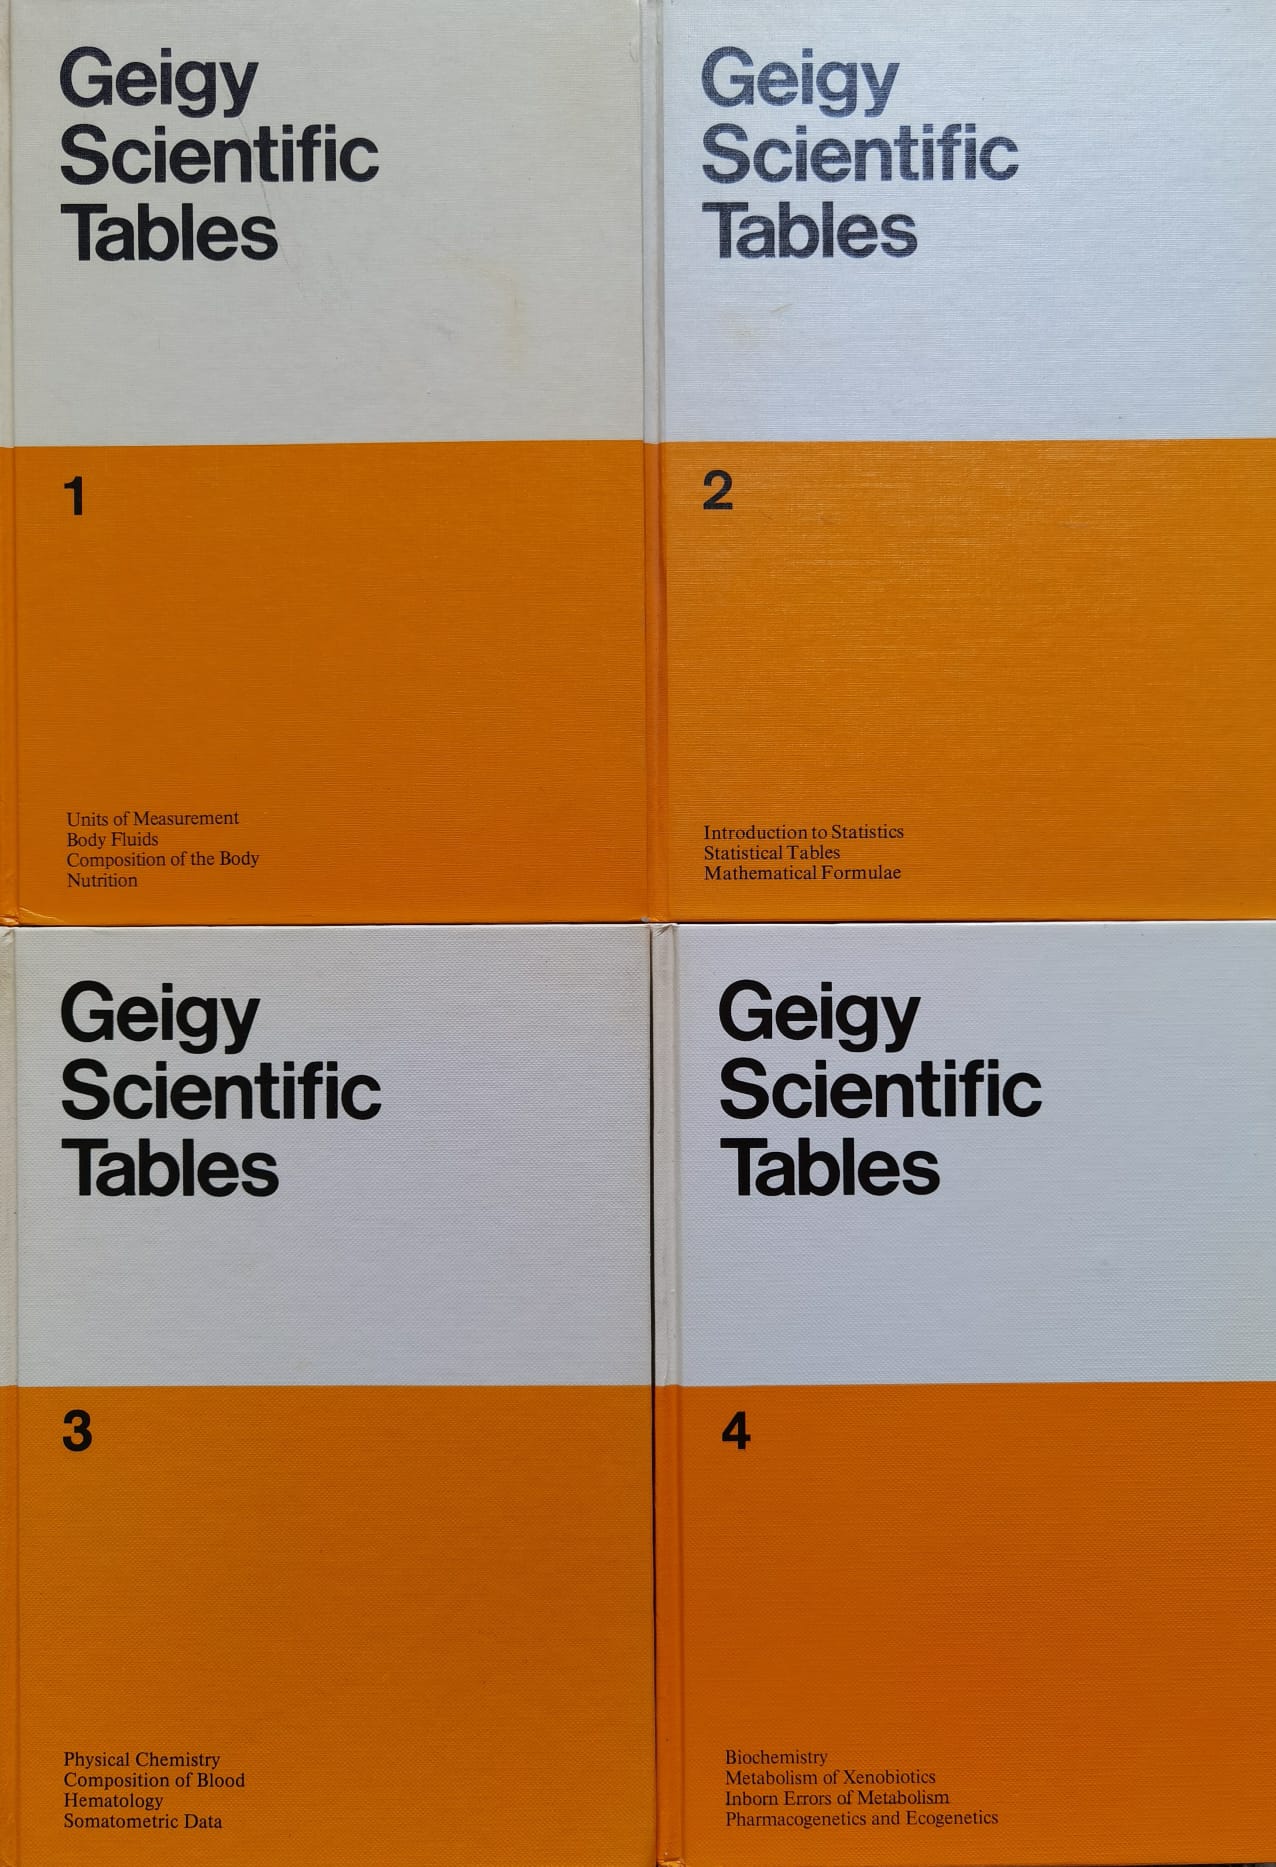 geigy scientific table vol. 1-4                                                                      edited by c. lentner                                                                                